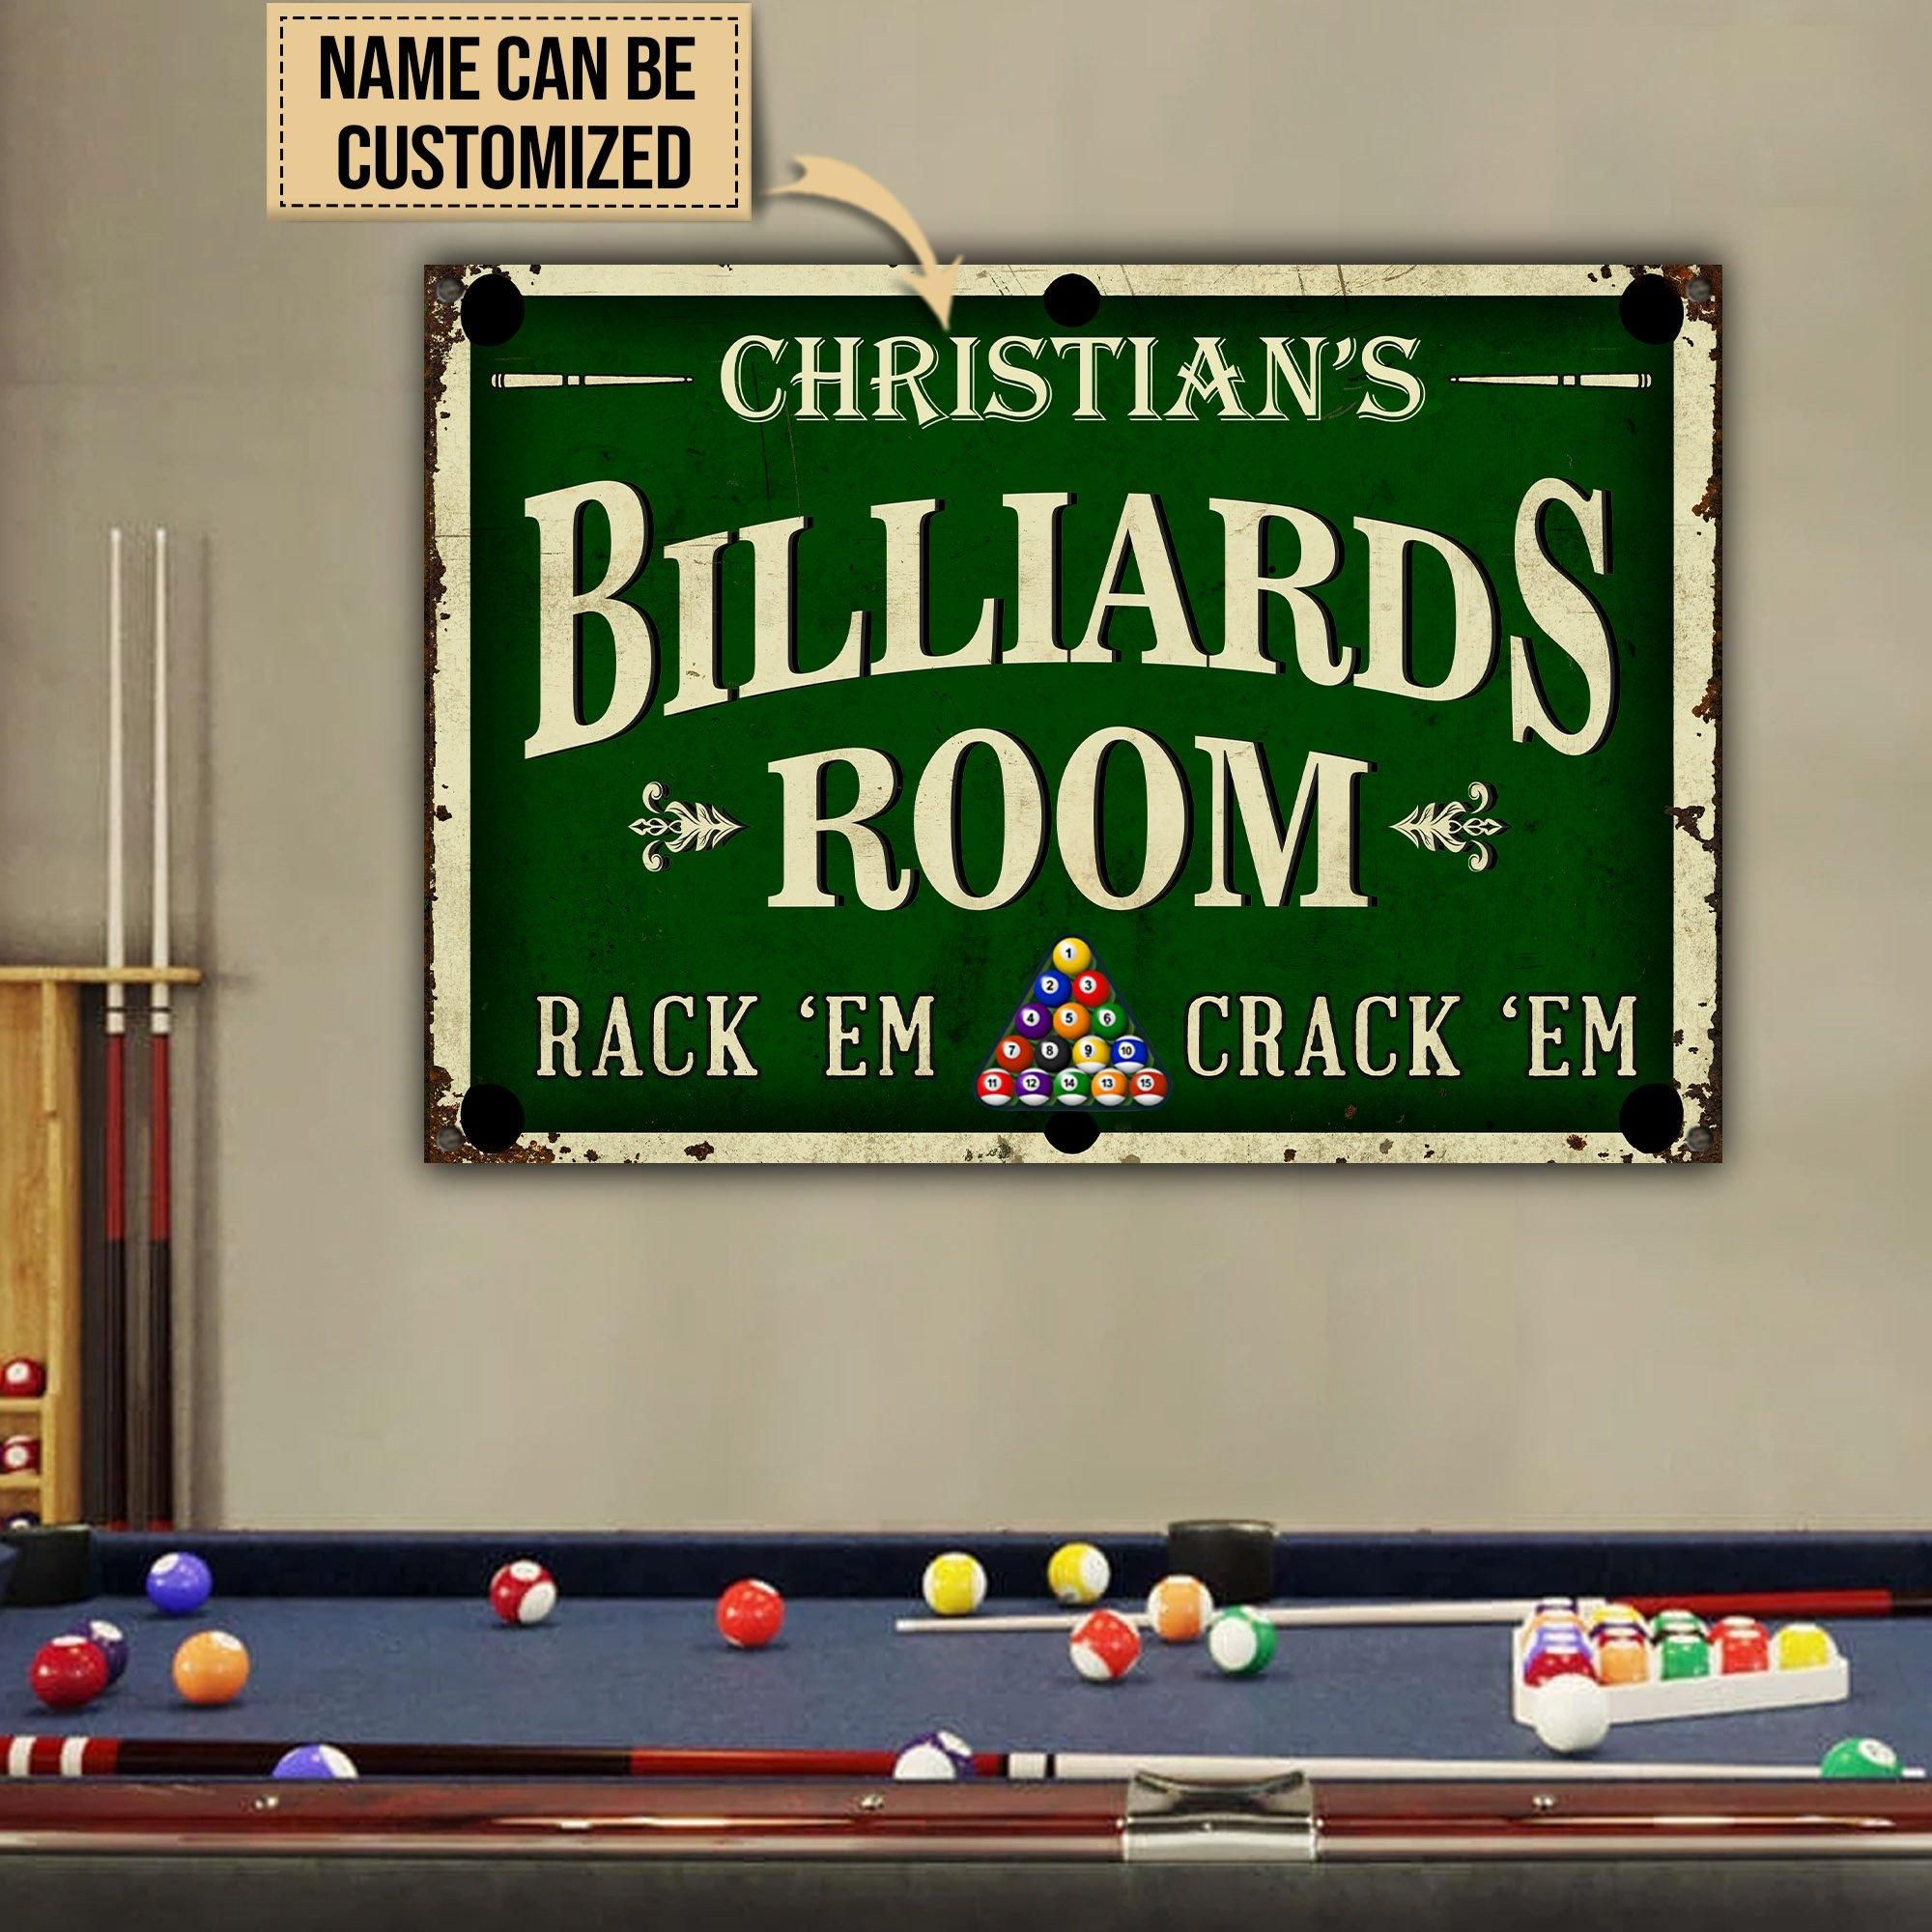 Personalized Billiards Room Rack'em Crack'em Customized Classic Metal Signs